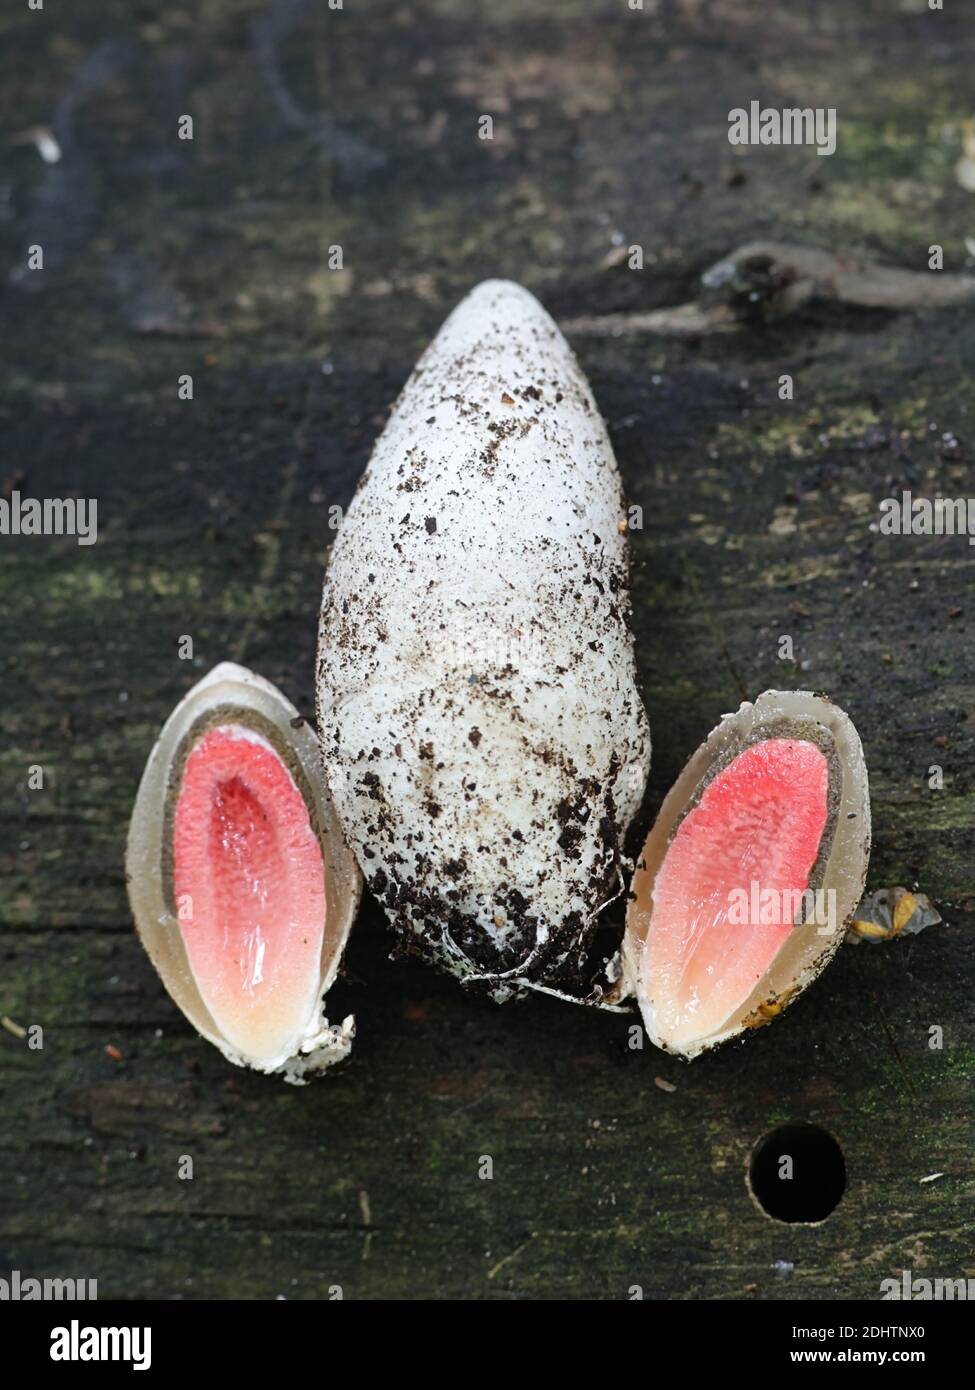 Mutinus ravenelii, known as the red stinkhorn fungus, egg of stinkhorn split open Stock Photo